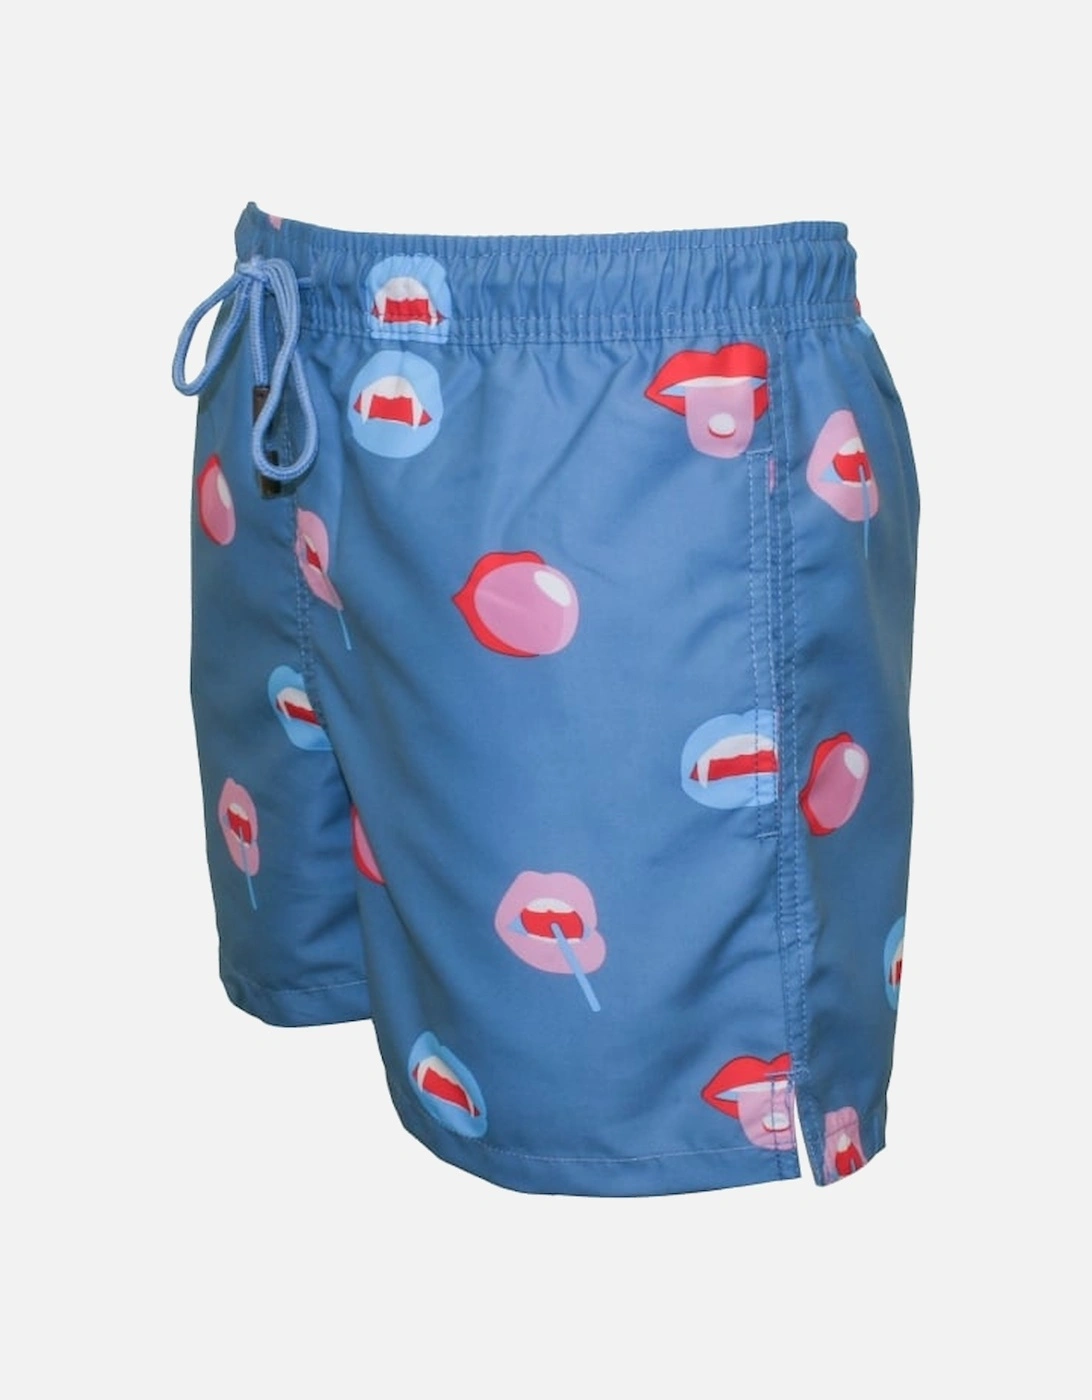 Big Mouth Swim Shorts, Teal Blue